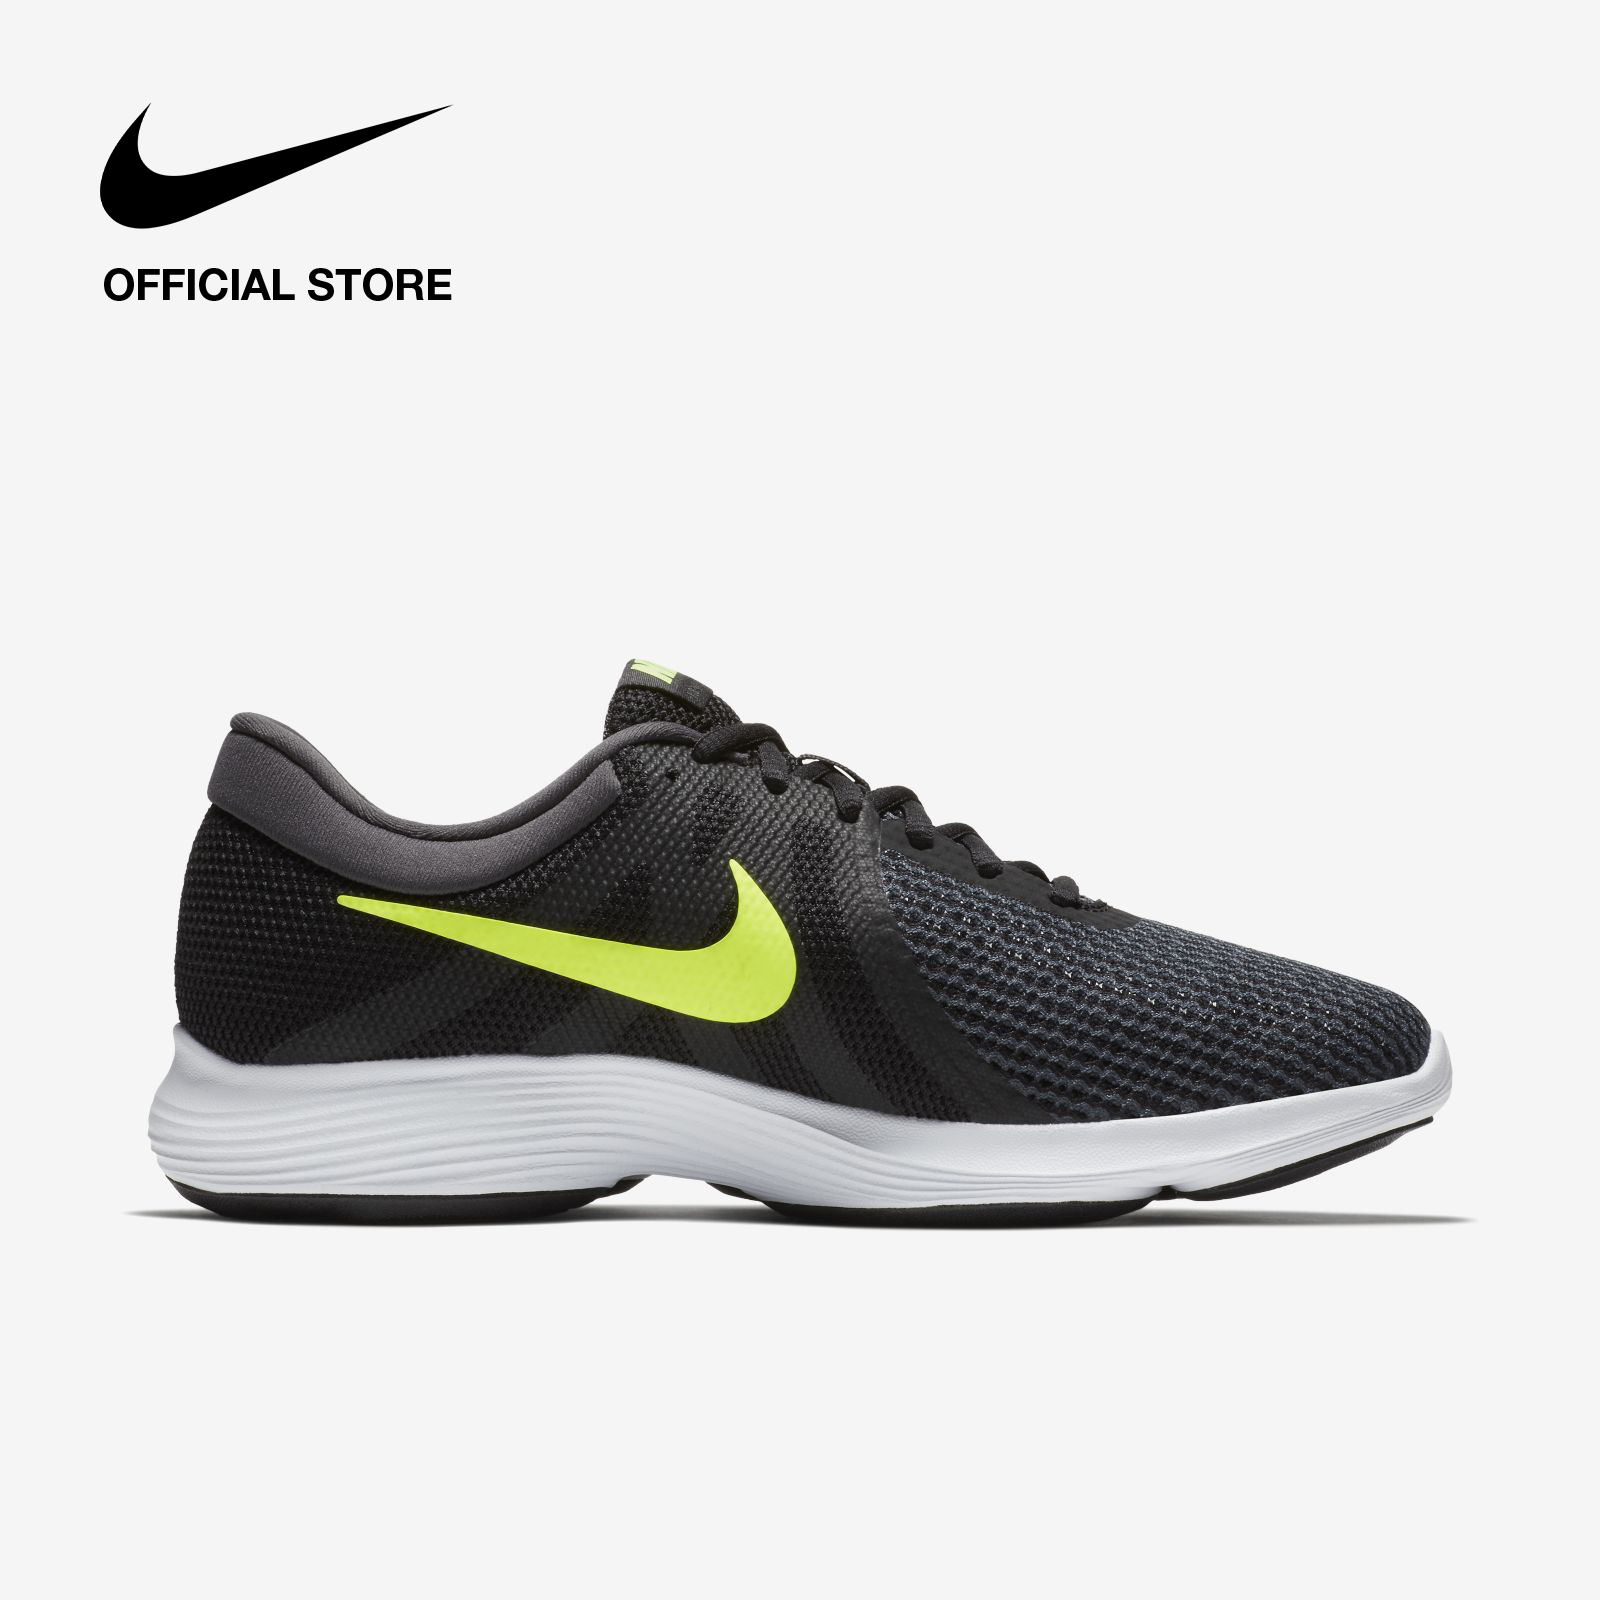 Nike Men's Revolution 4 Shoes - Black รองเท้าผู้ชาย Nike Revolution 4 - สีดำ